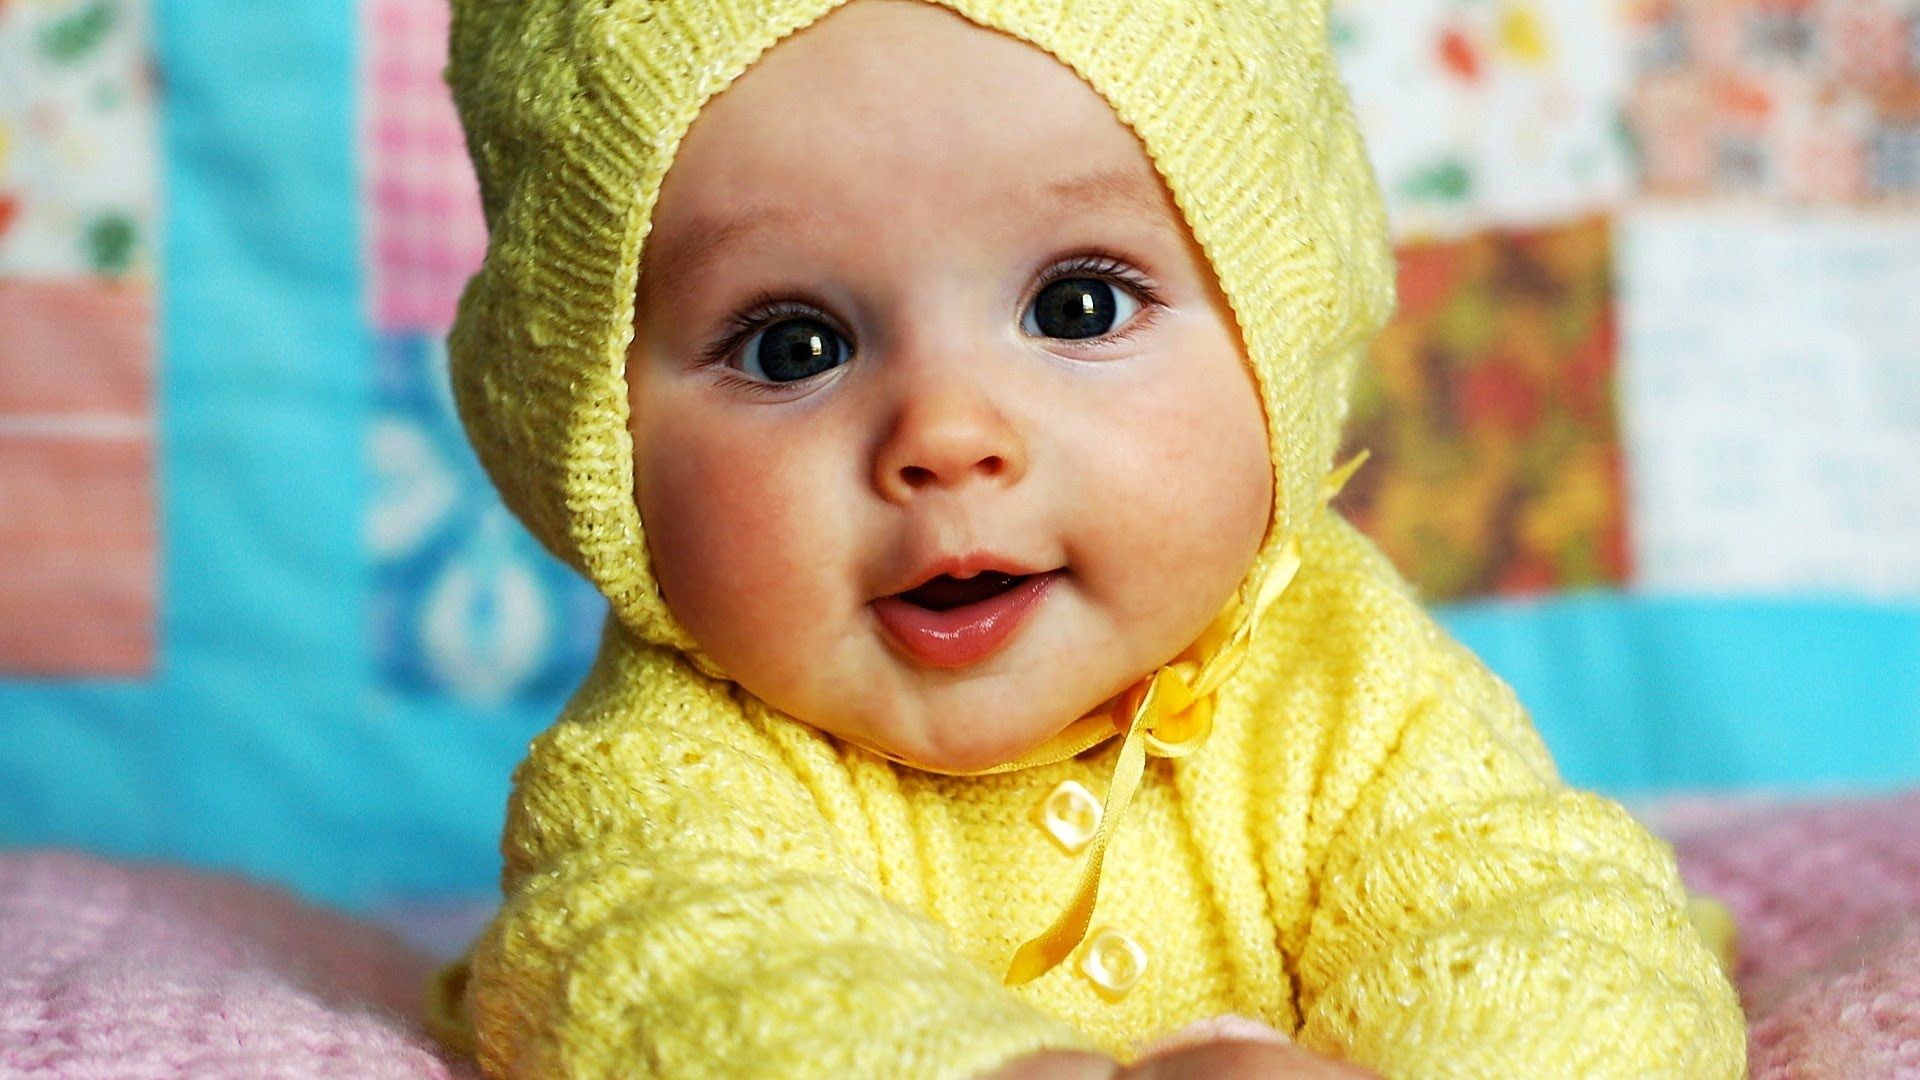 Baby HD Wallpaper. Pretty baby girl names, Cute baby wallpaper, Cute baby boy picture